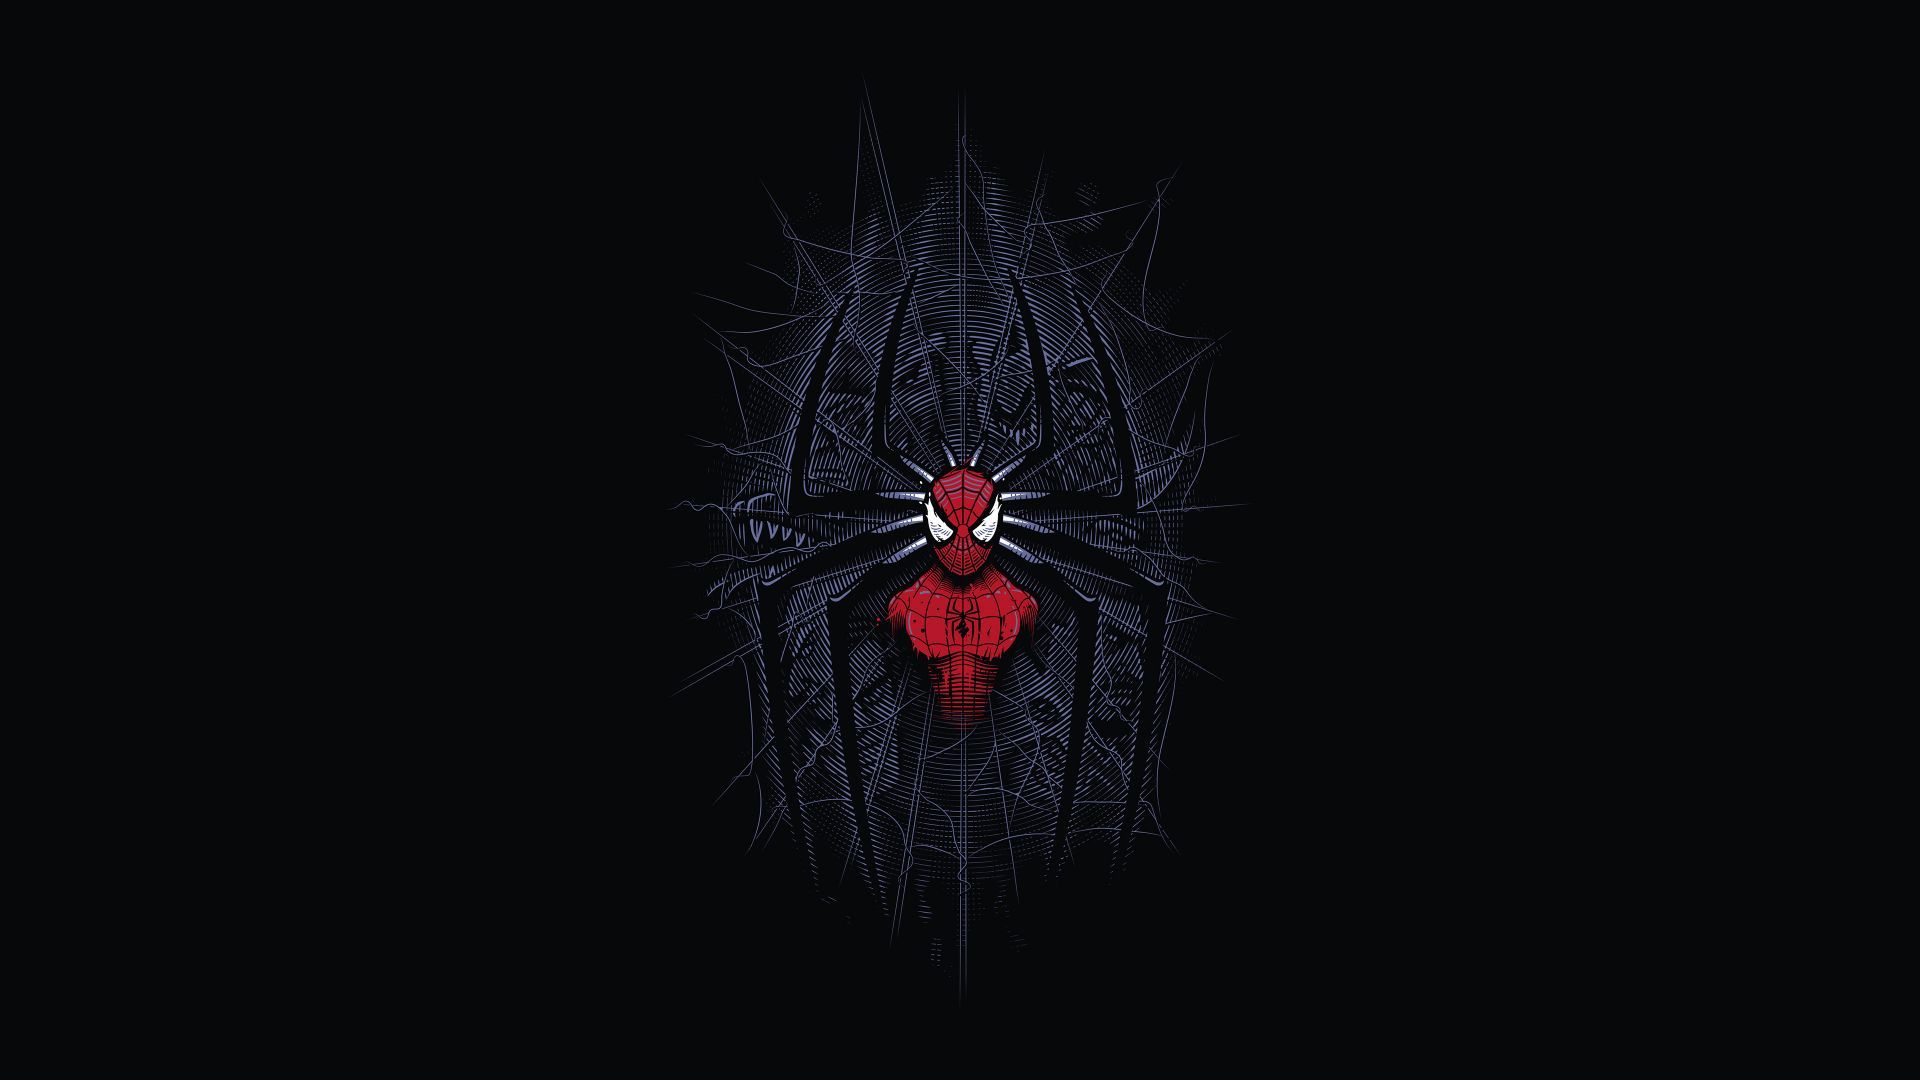 Spider Man, Dark, Minimalist, Digital Art Wallpaper, HD Image, Picture, Background, 6a0ea2